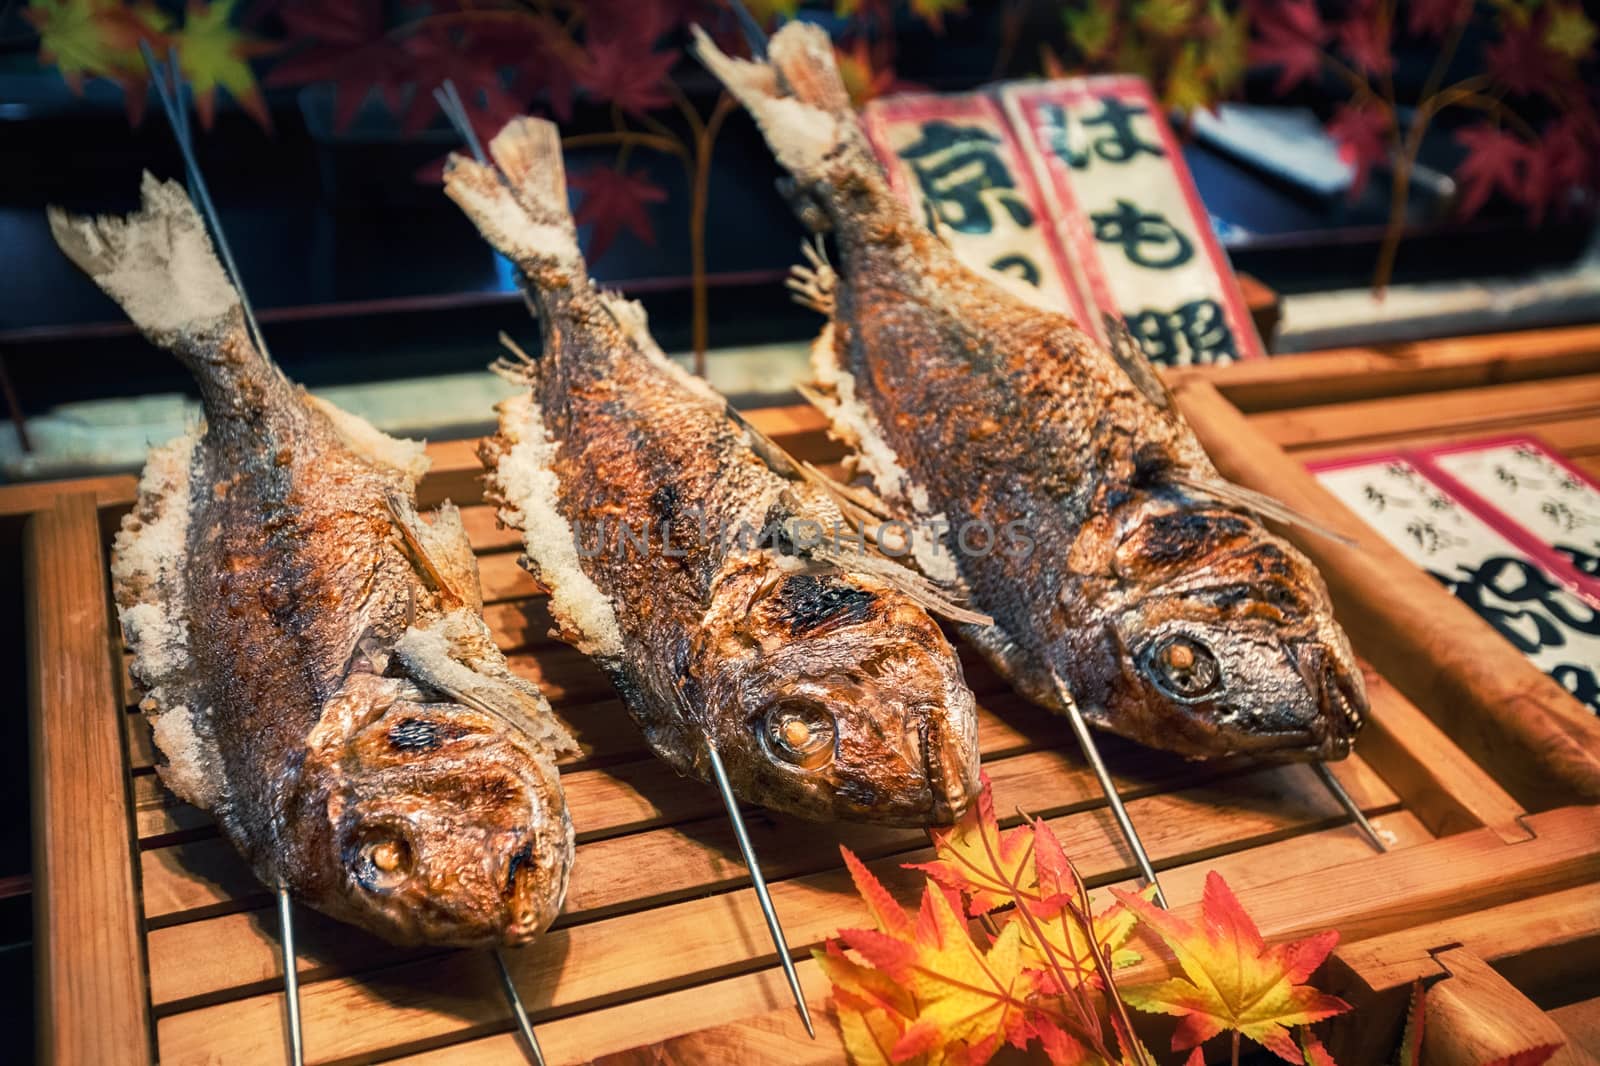 Grilled fishes on sticks as street food at Nishiki market, Kyoto, Japan by zhu_zhu